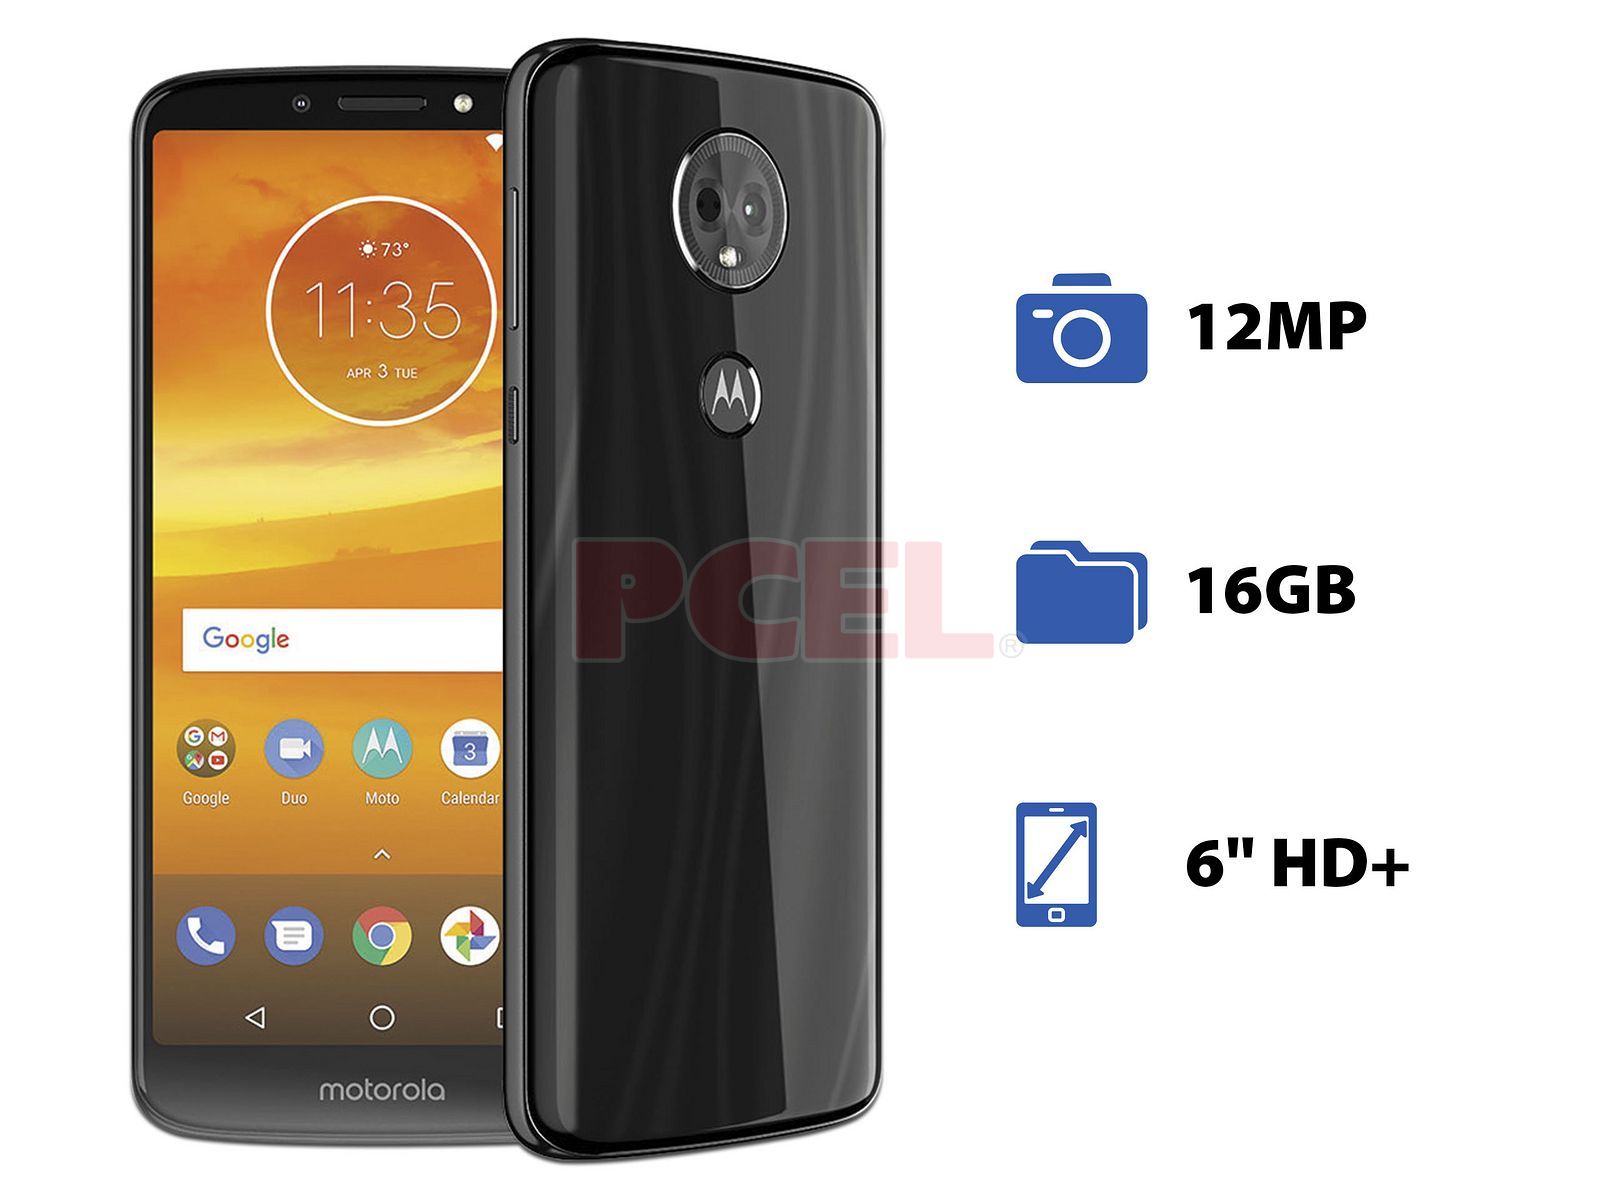 Smartphone Motorola Moto E5 Plus: Procesador Snapdragon 425 Quad Core (  GHz), RAM de 2GB, Almacenamiento de 16GB (Expandible), Pantalla LED de 6